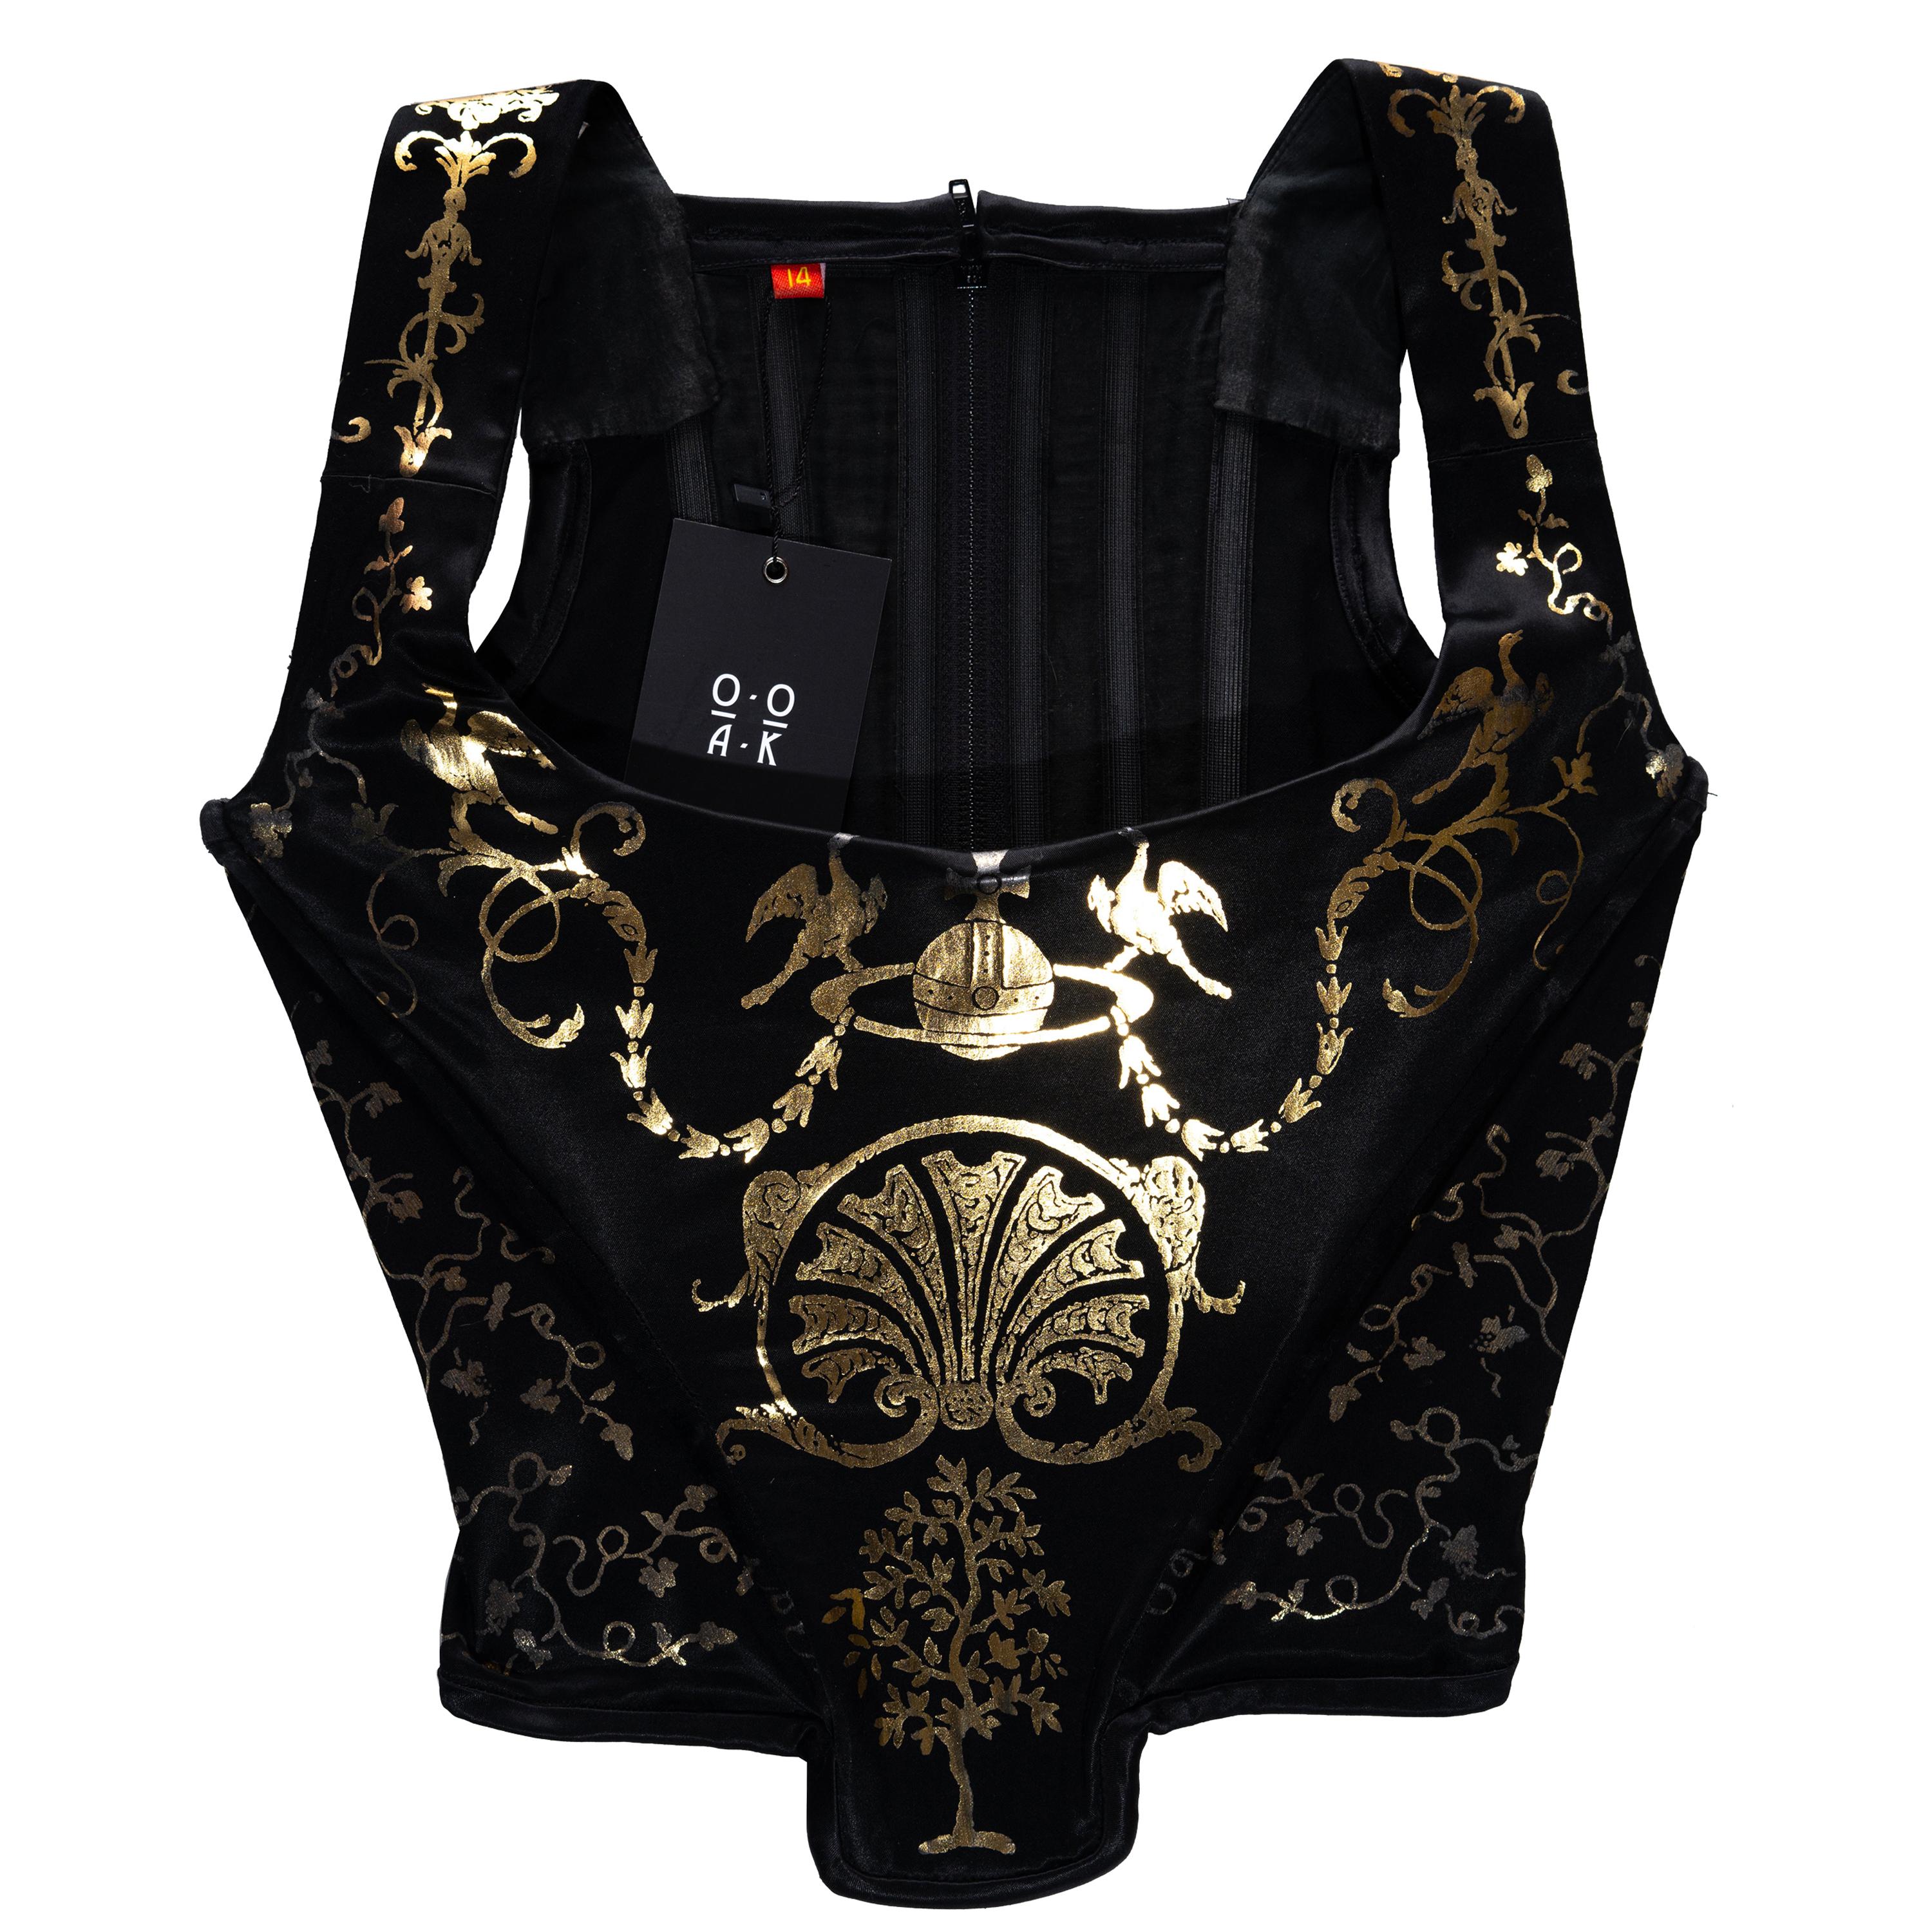 Vivienne Westwood black satin corset with metallic gold pattern, ss 1992